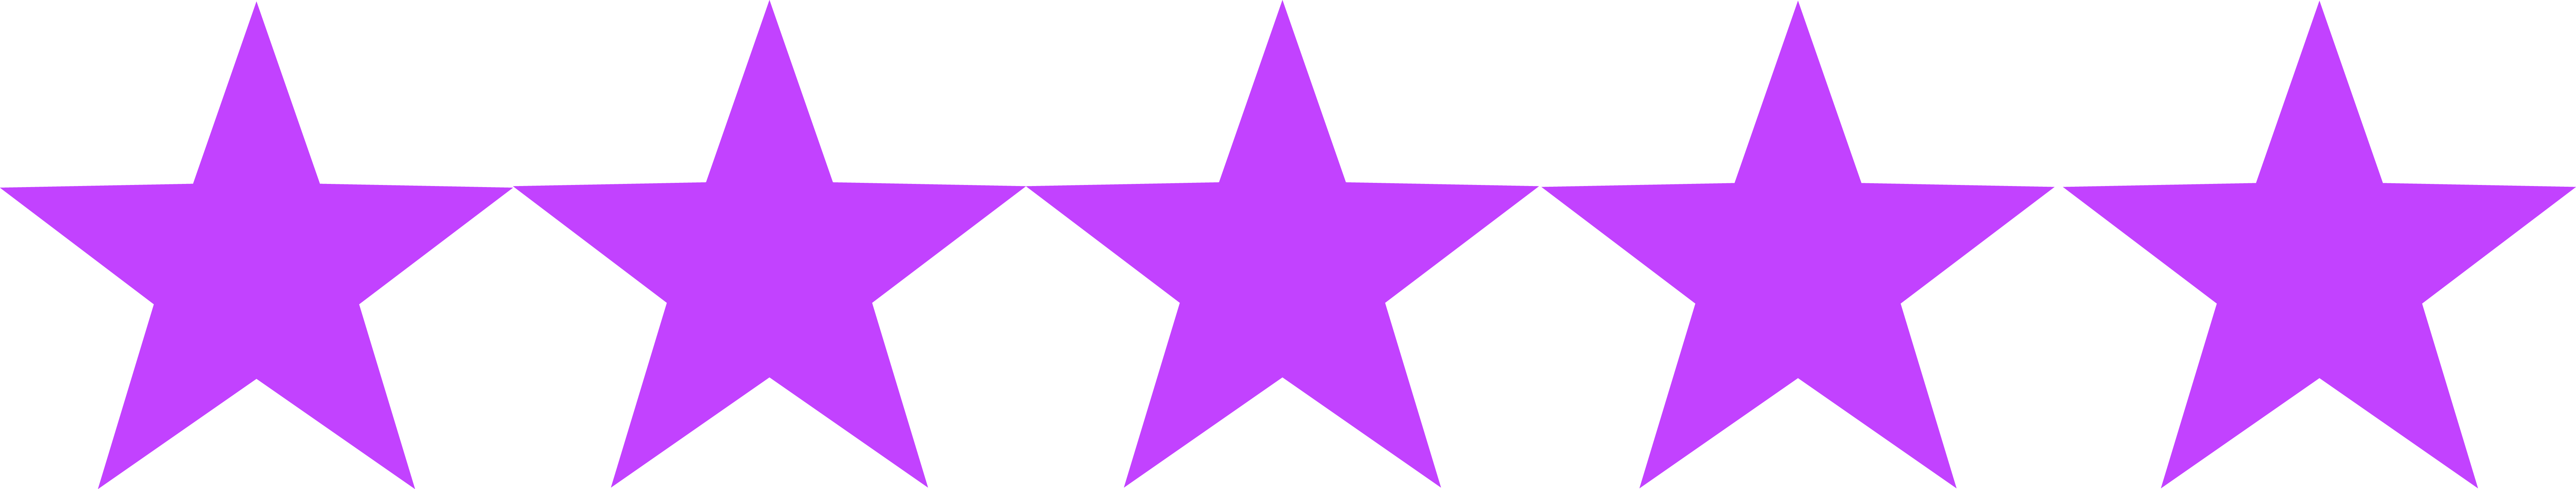 Lent Madness - 5 Star Rating Purple (7307x1388)